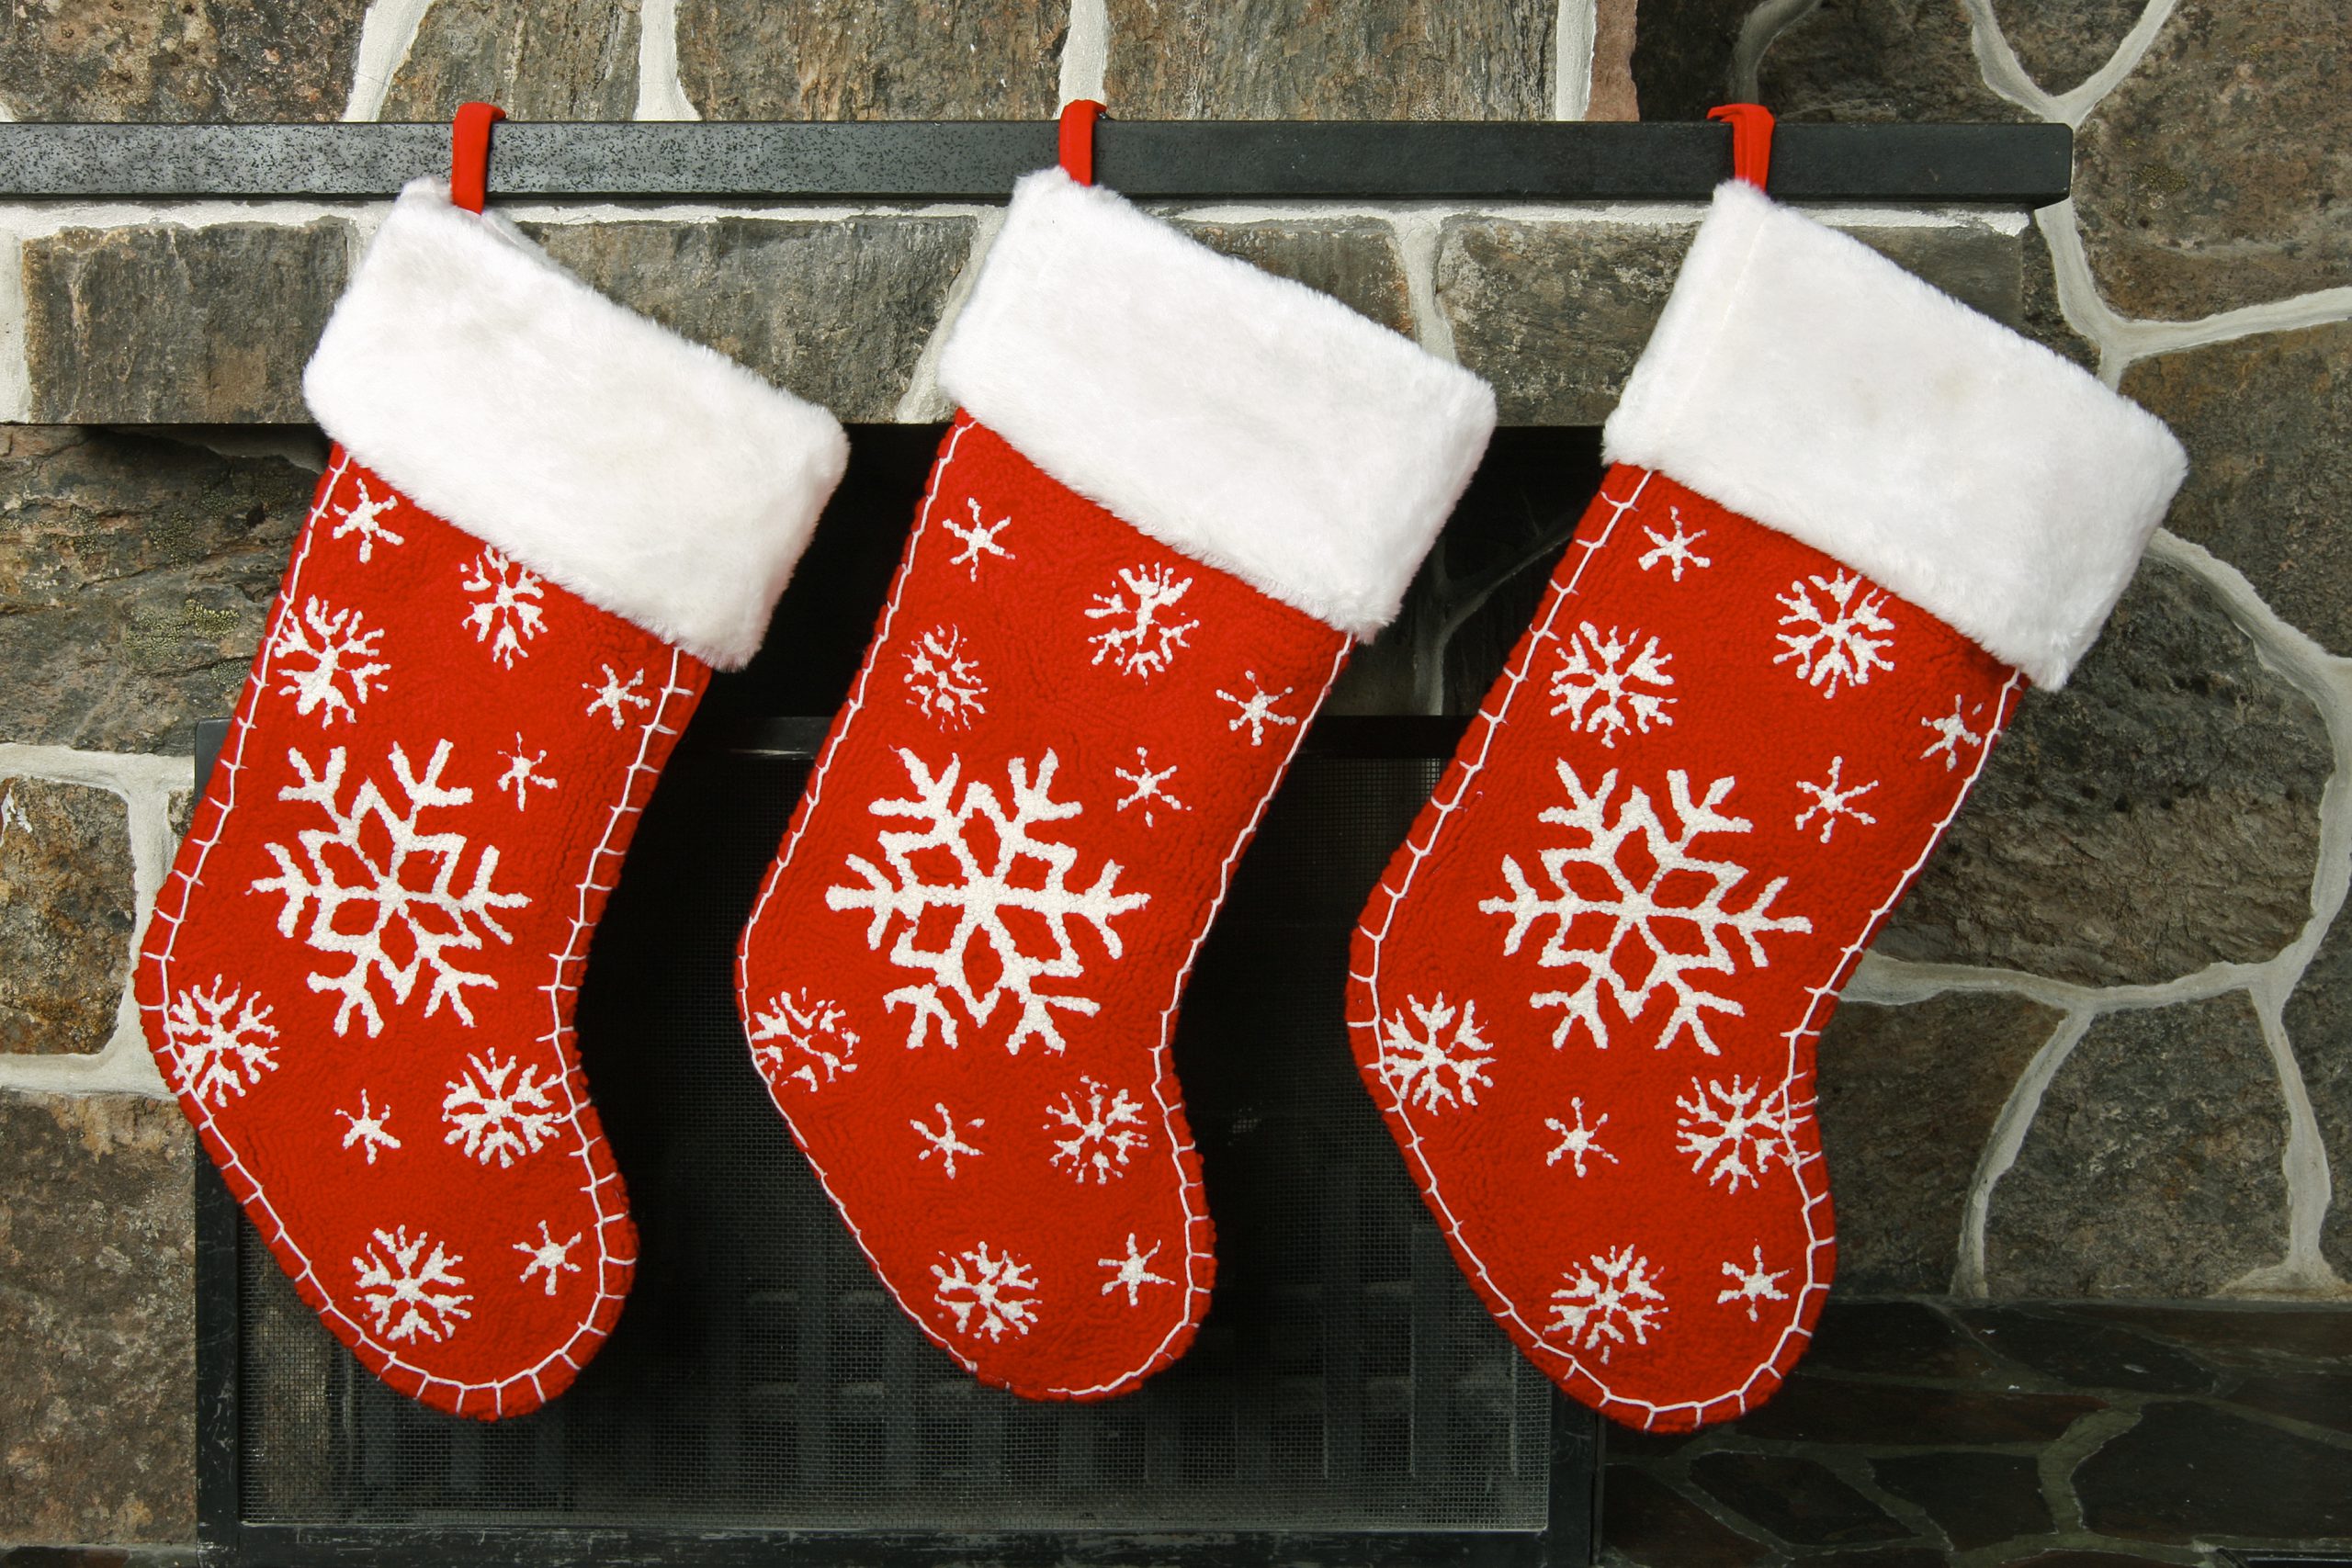 Christmas stockings on fireplace mantel